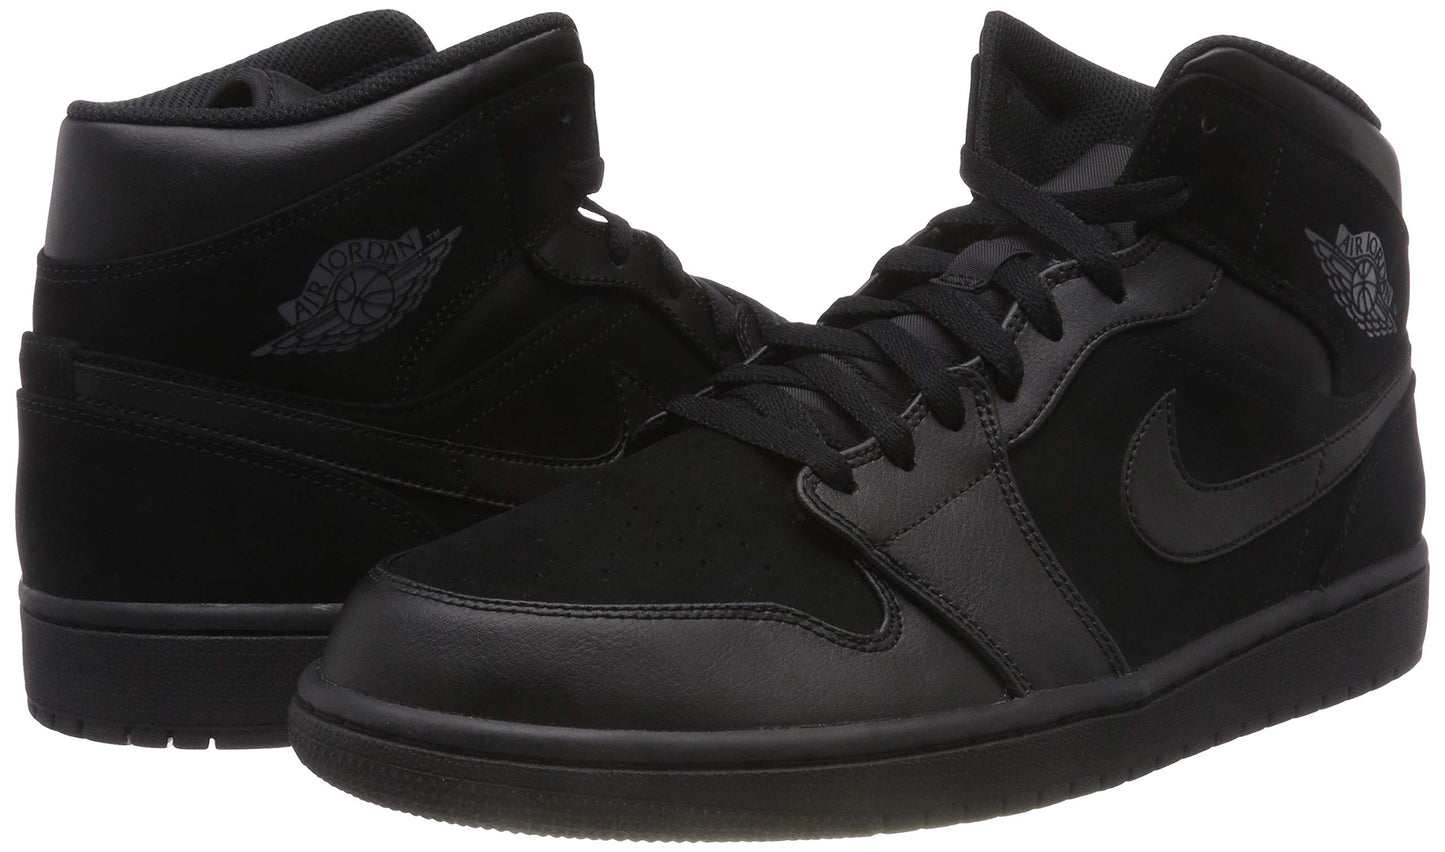 Nike Air Jordan 1 Mid Hombres Tamaño 13 Triple Negro/Gris oscuro 554724-050